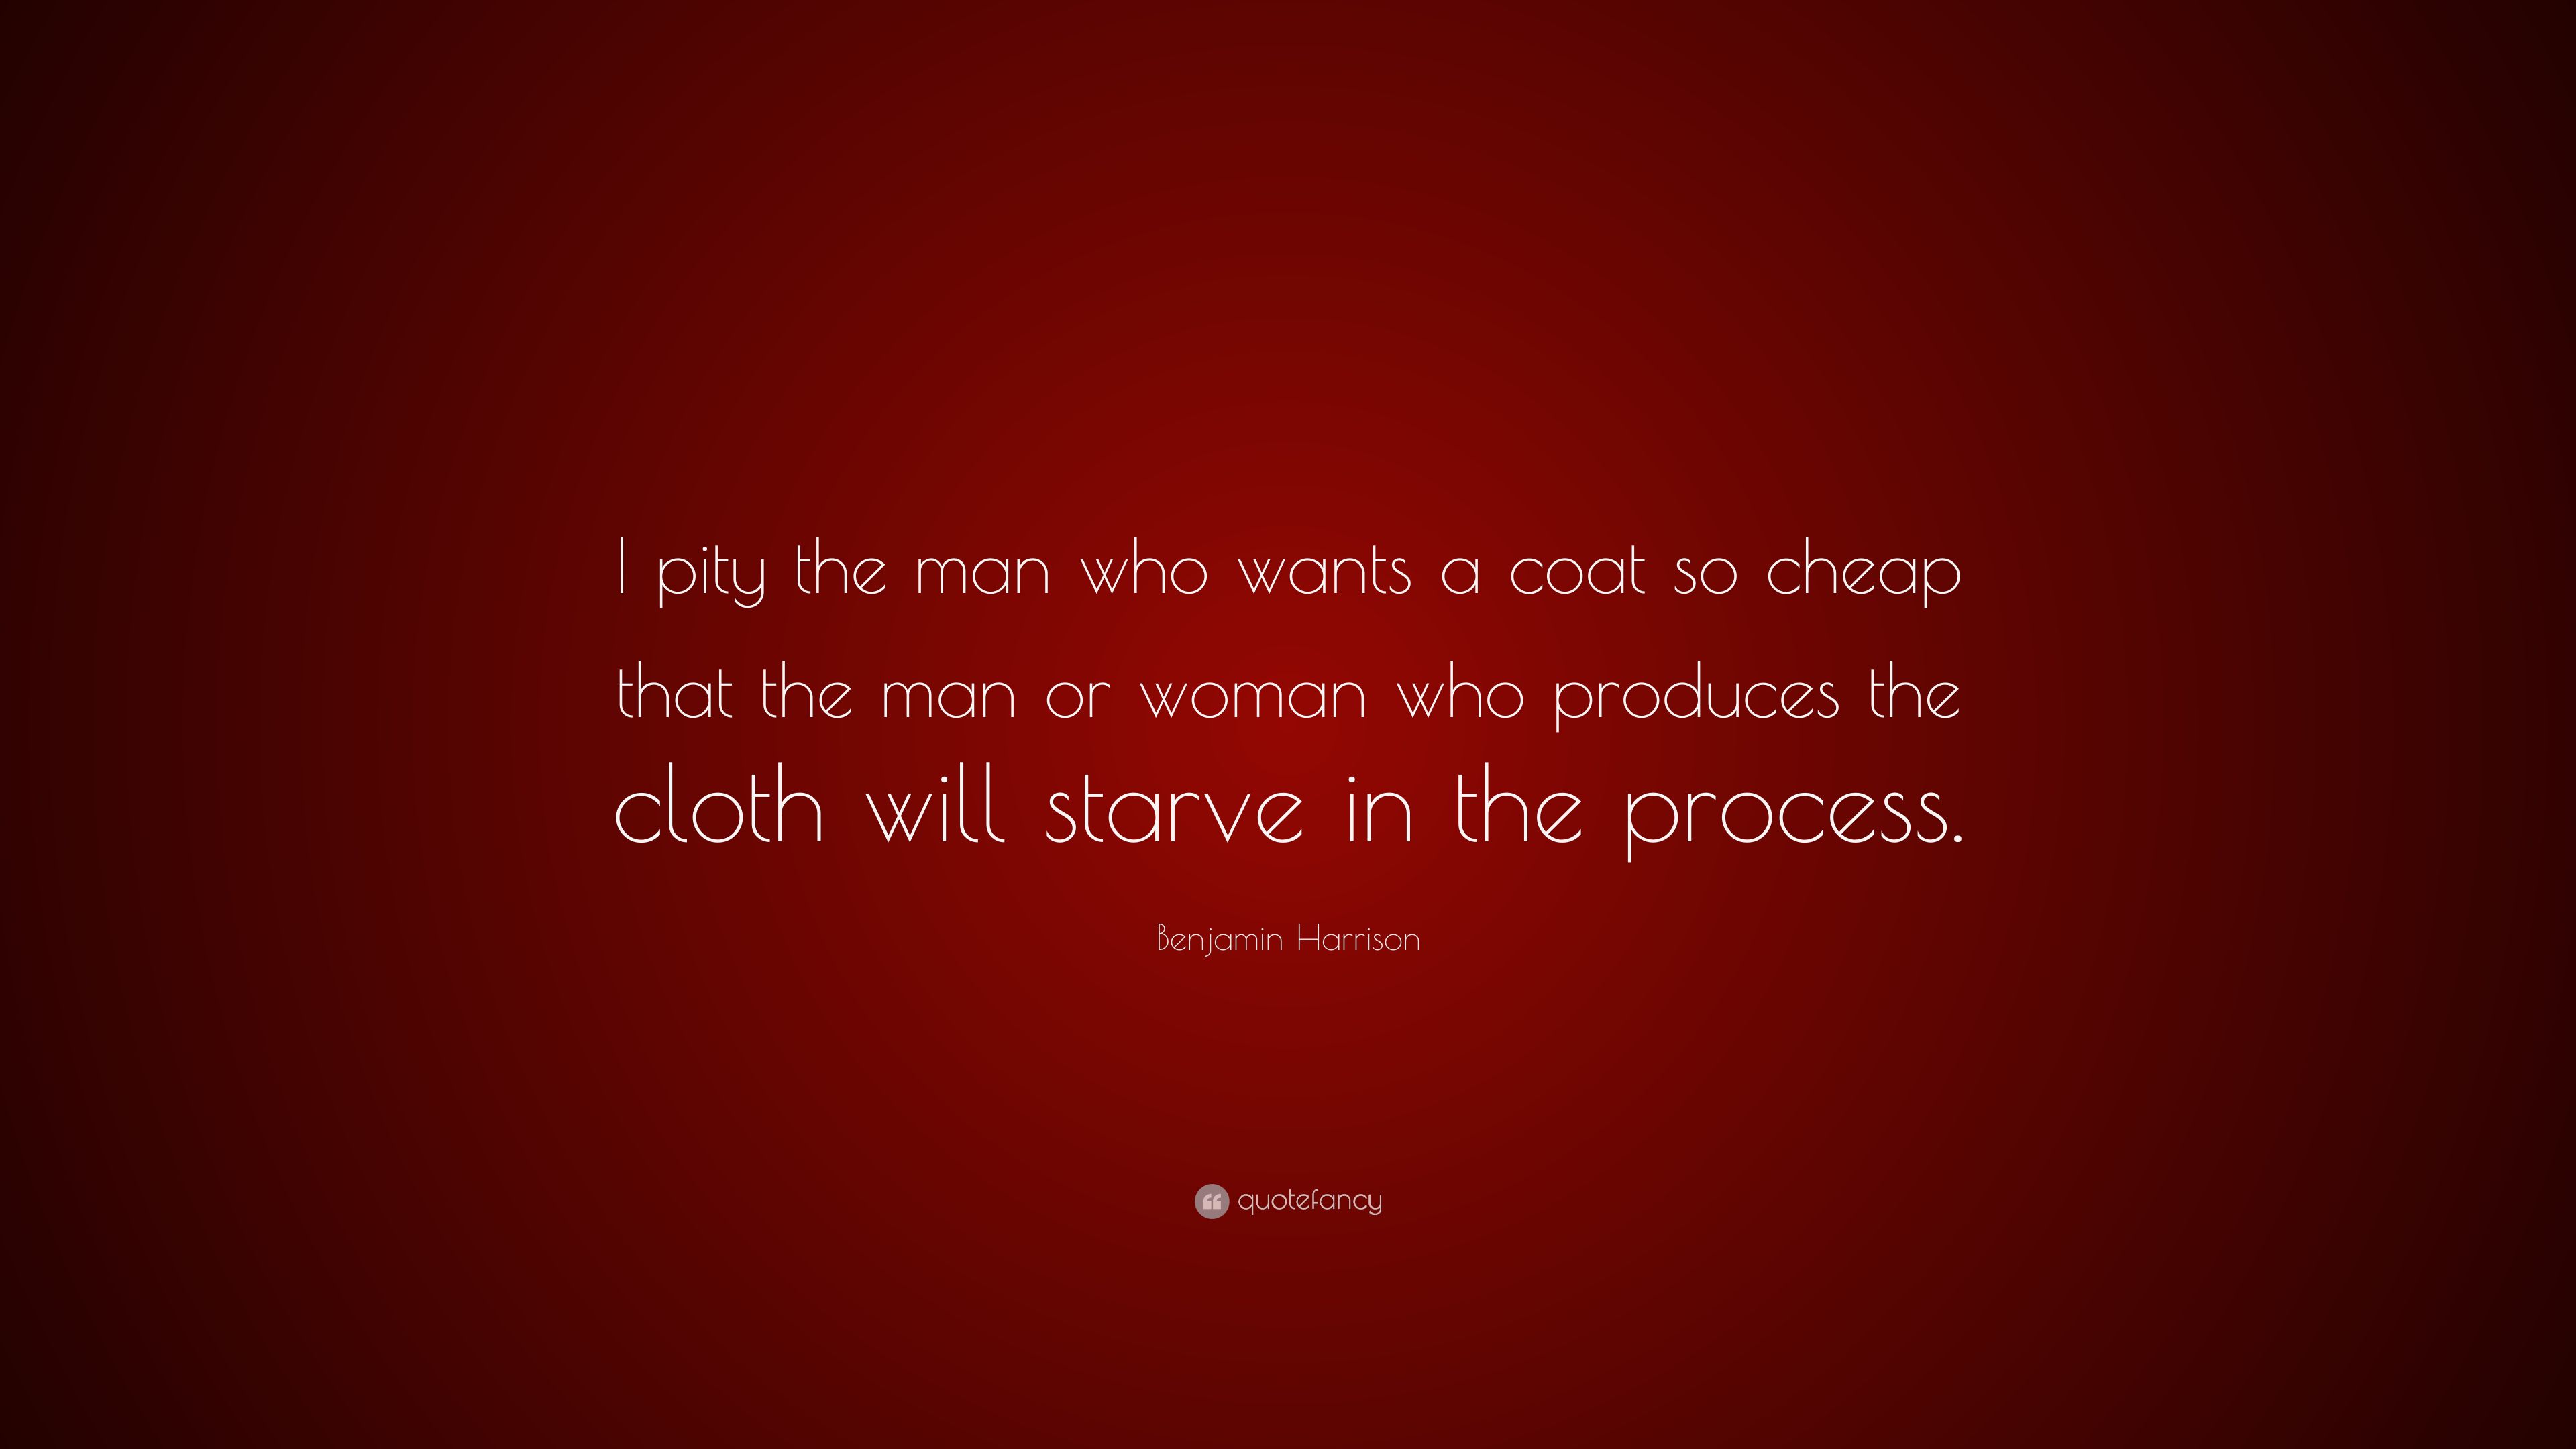 Benjamin Harrison Quote: “I pity the man who wants a coat so cheap